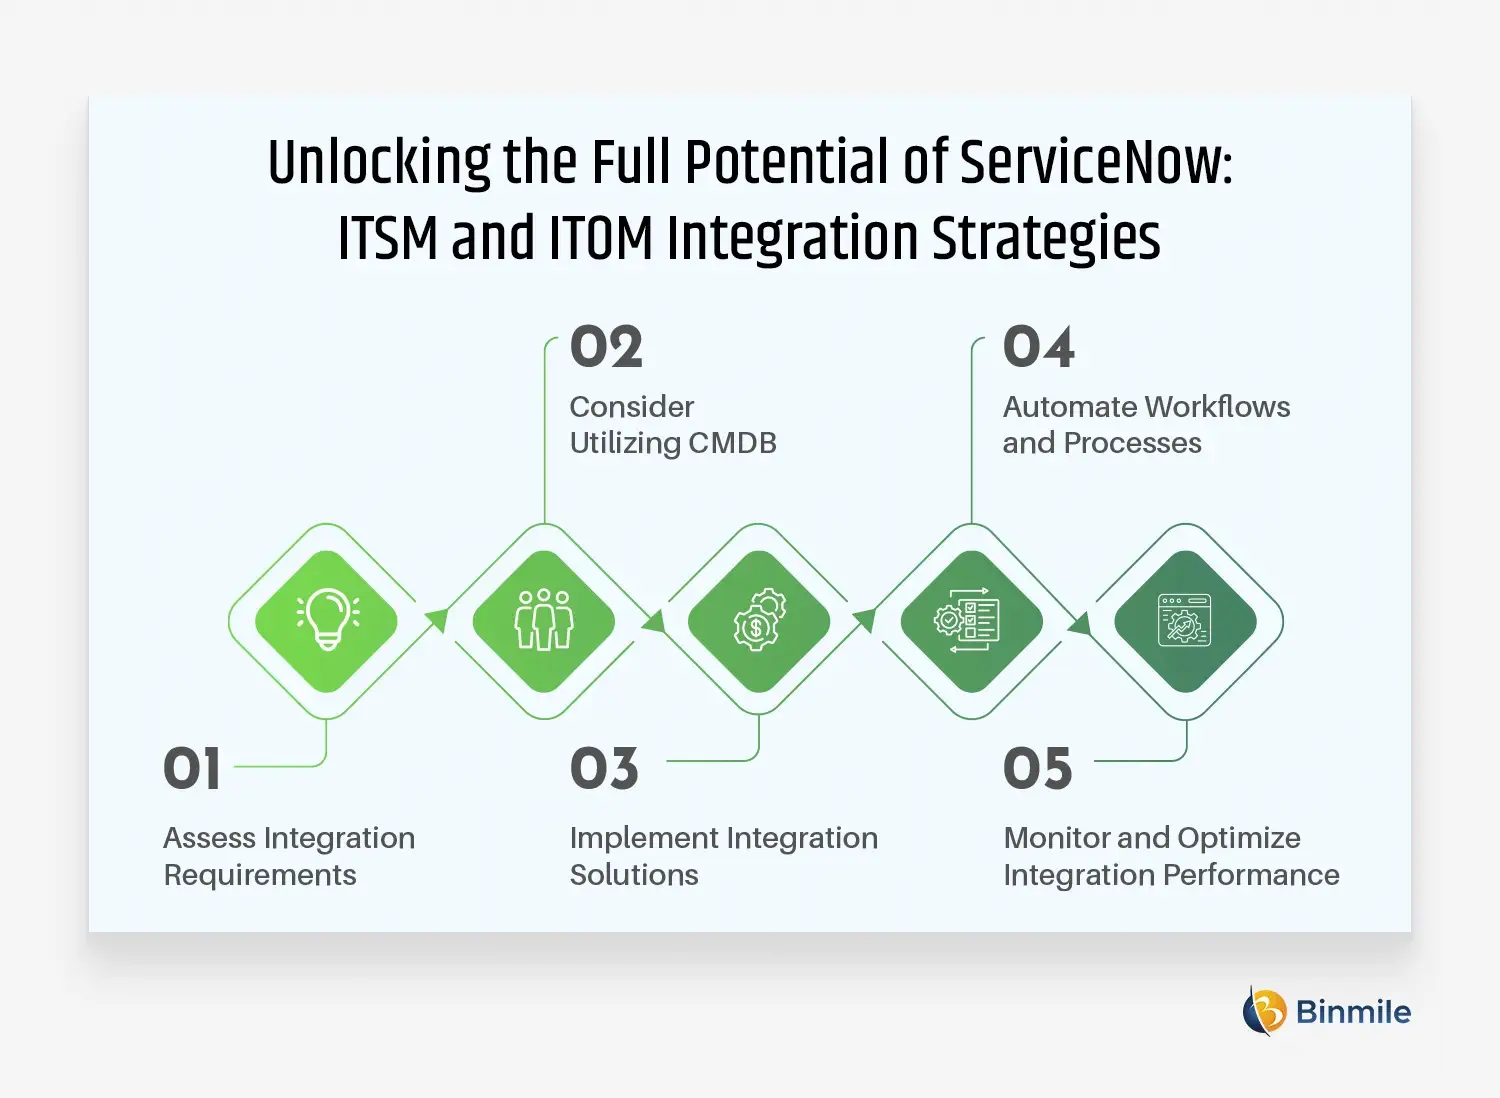 ITSM and ITOM Integration Strategies | Binmile